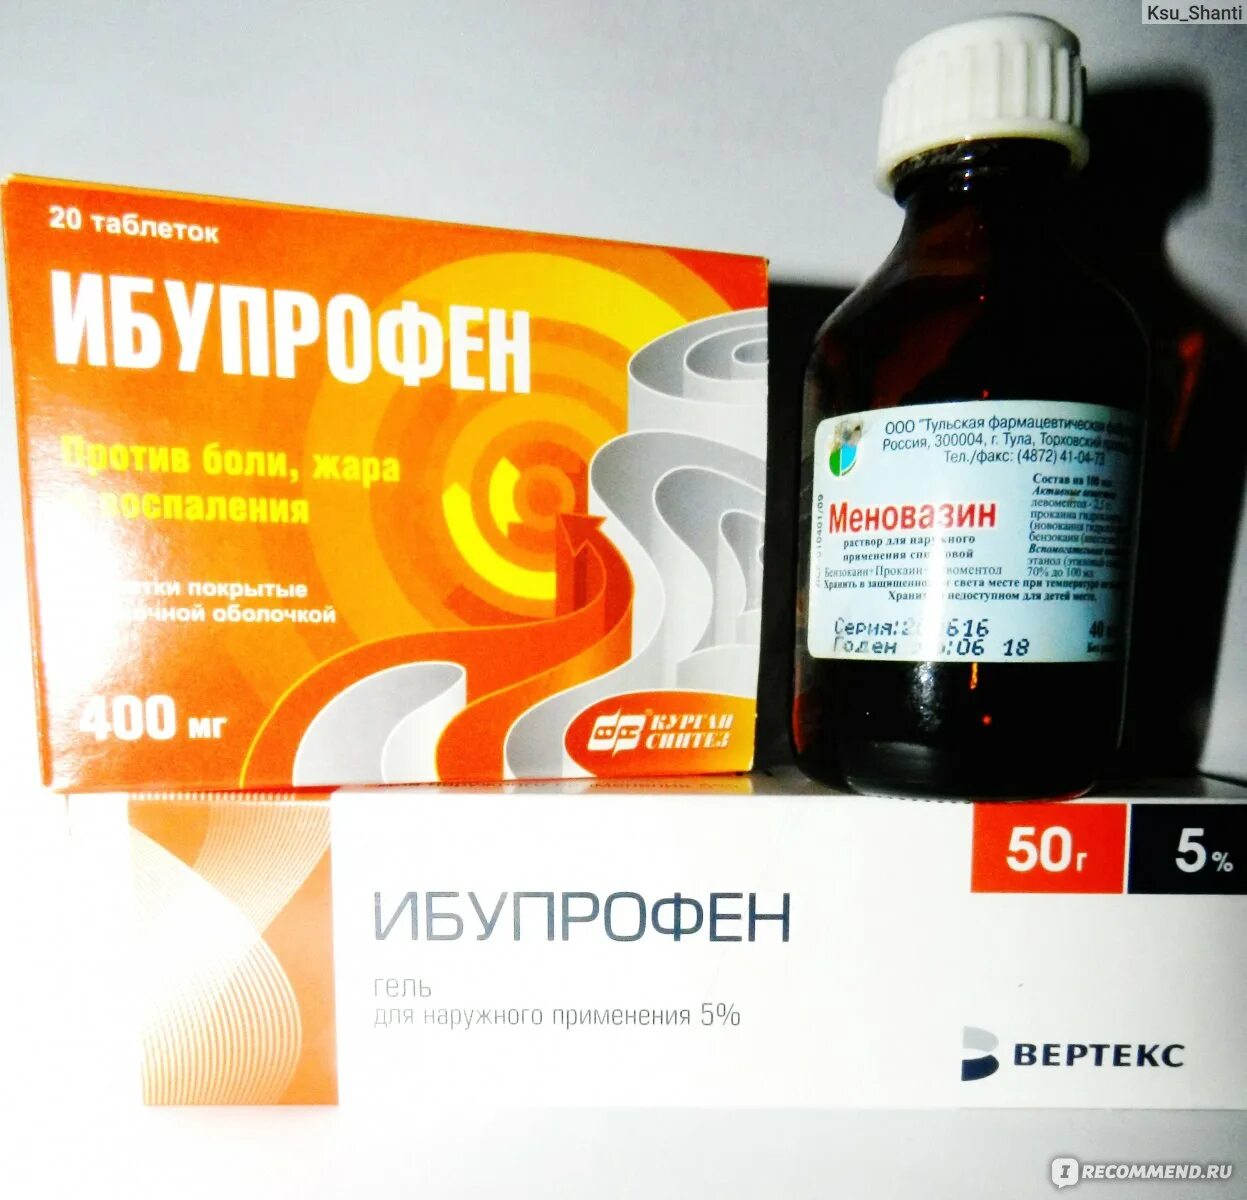 Меновазин и таблетки ибупрофен. Ибупрофен для суставов. Таблетки ибупрофена с меновазином. Меновазин и ибупрофен растирка для суставов.